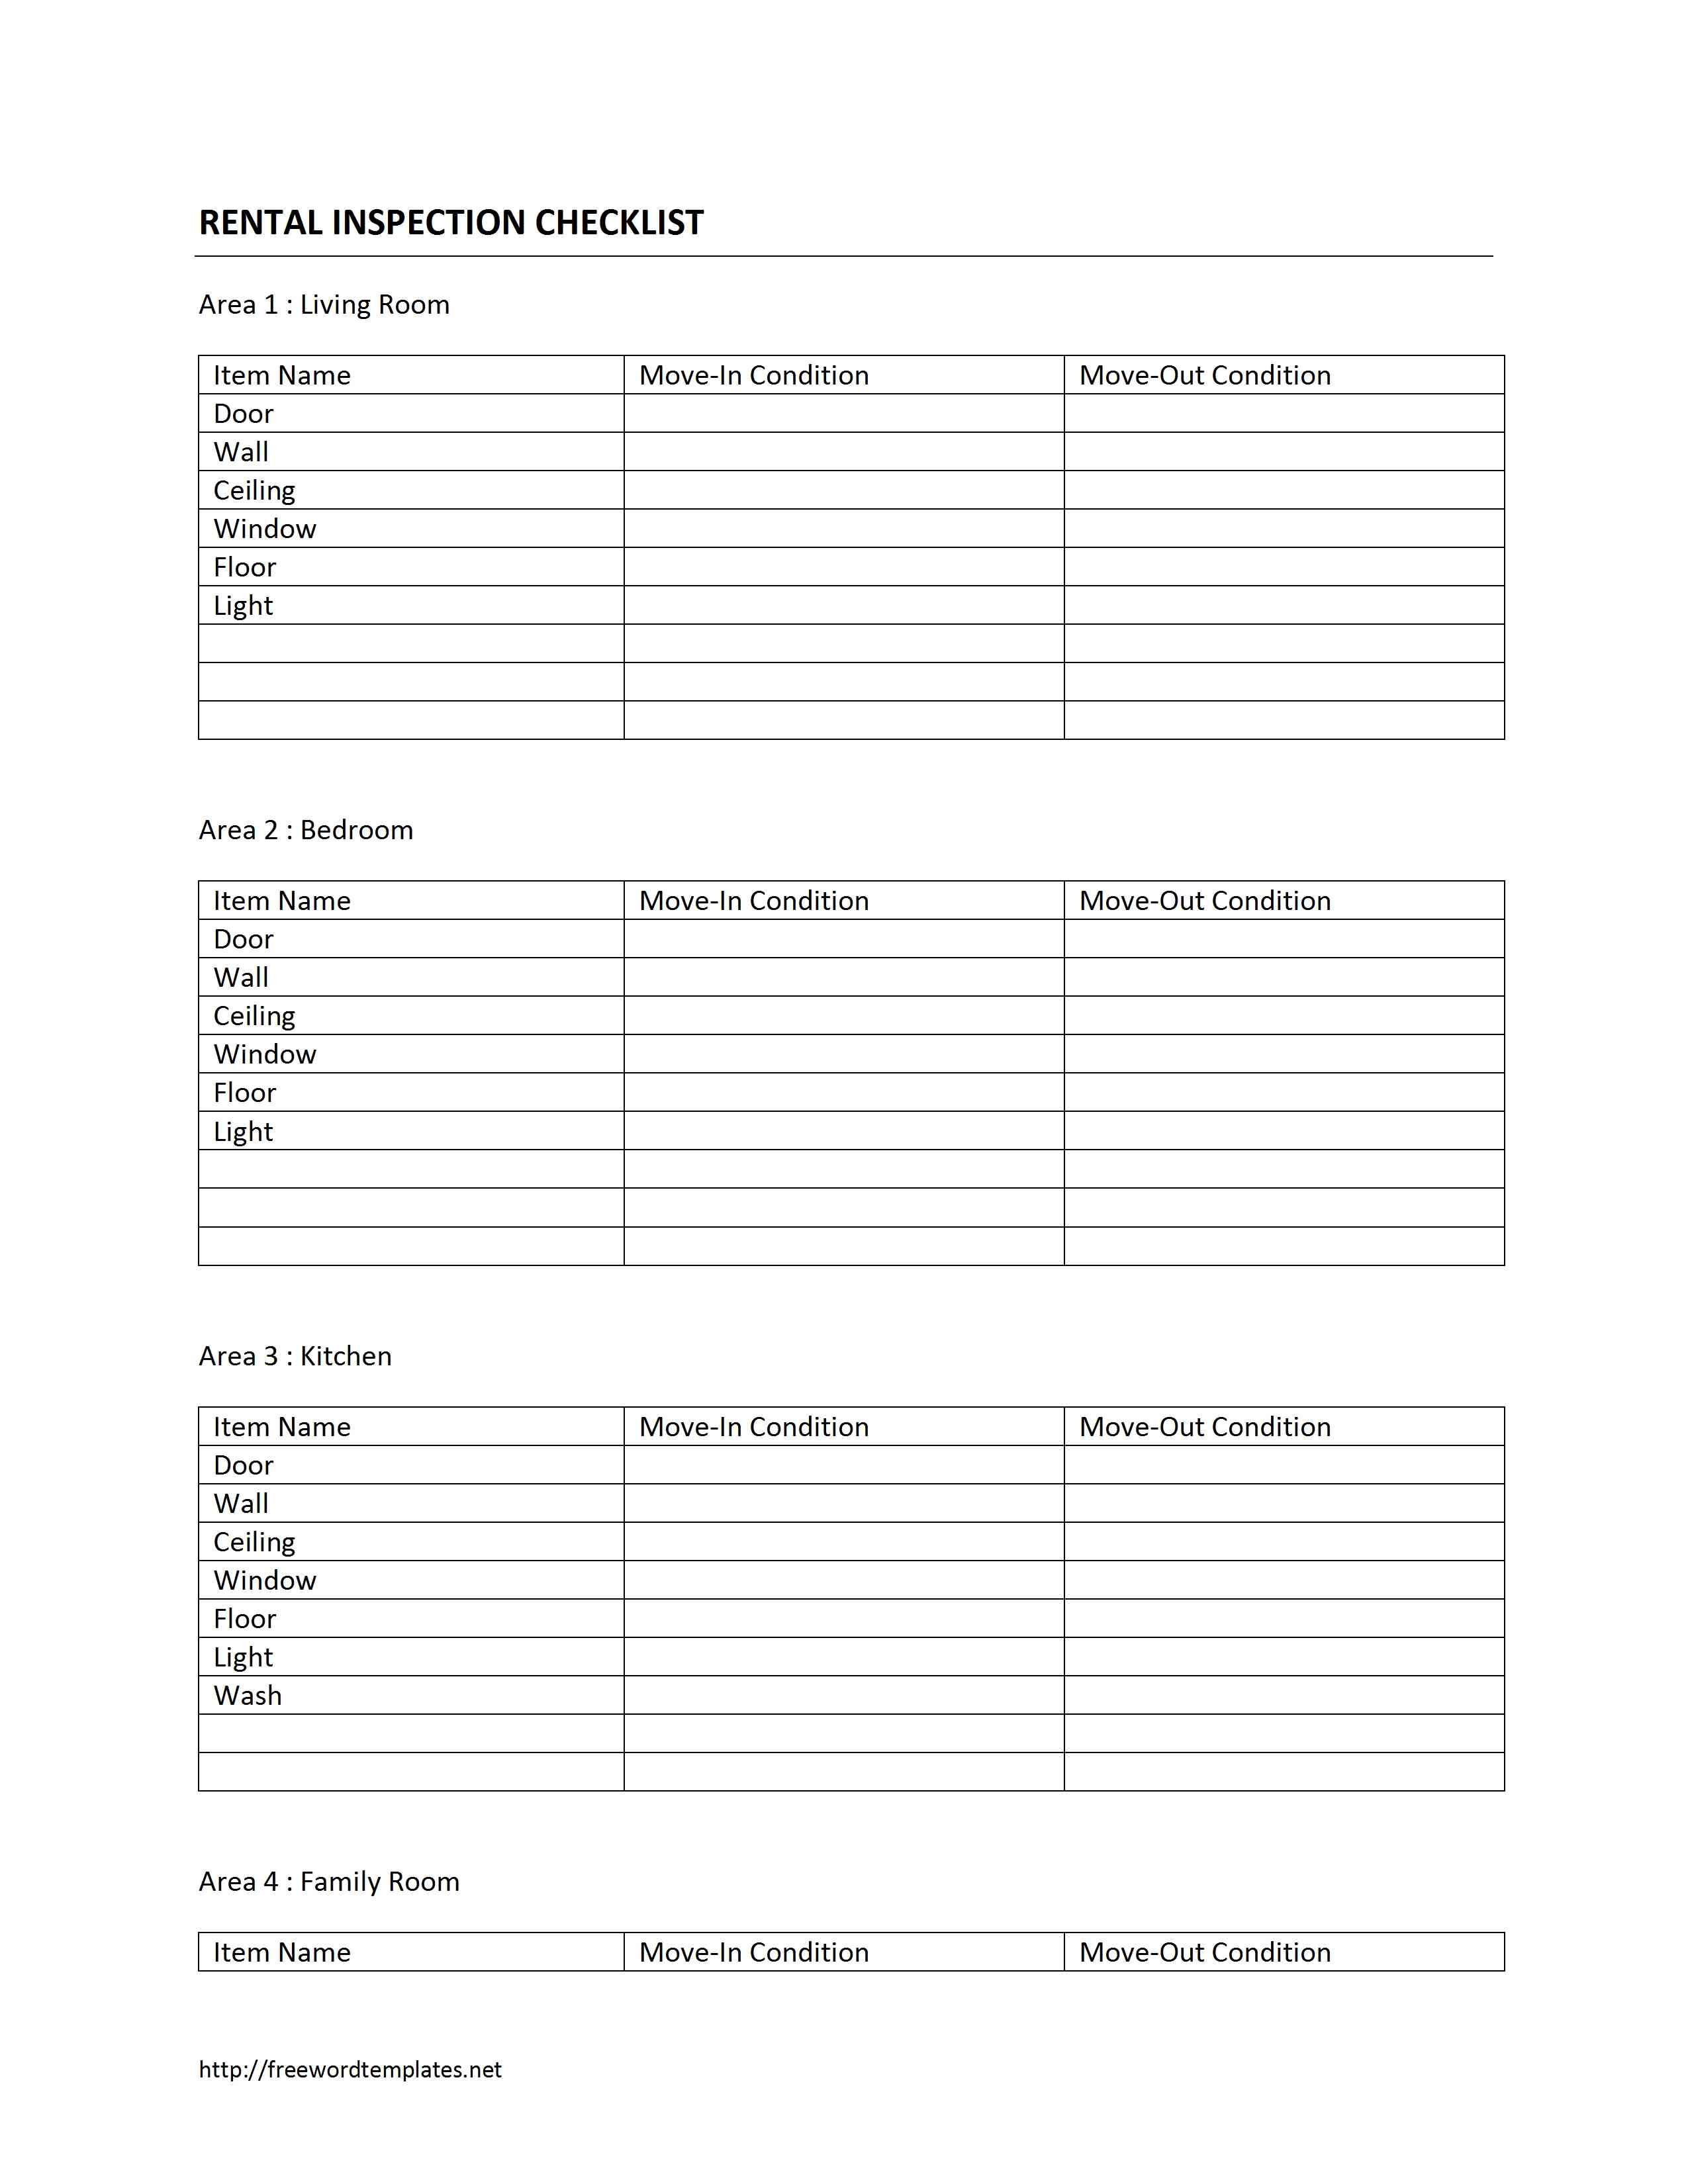 Excel Rental Inspection Checklist template